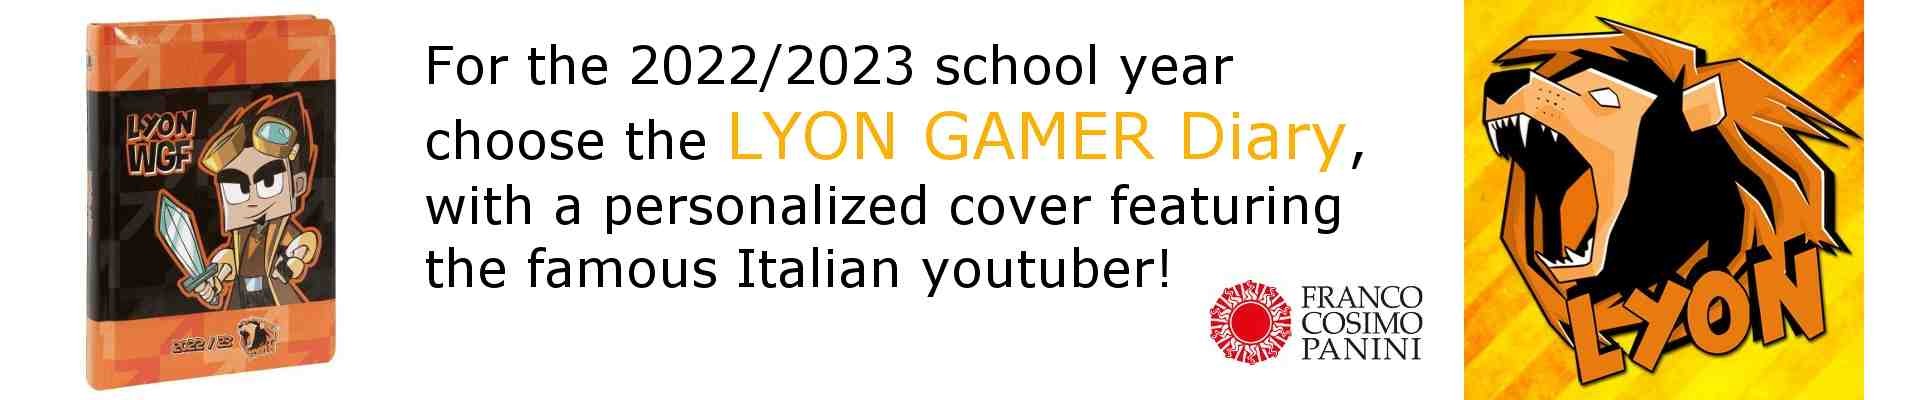 lyon gamer school diary